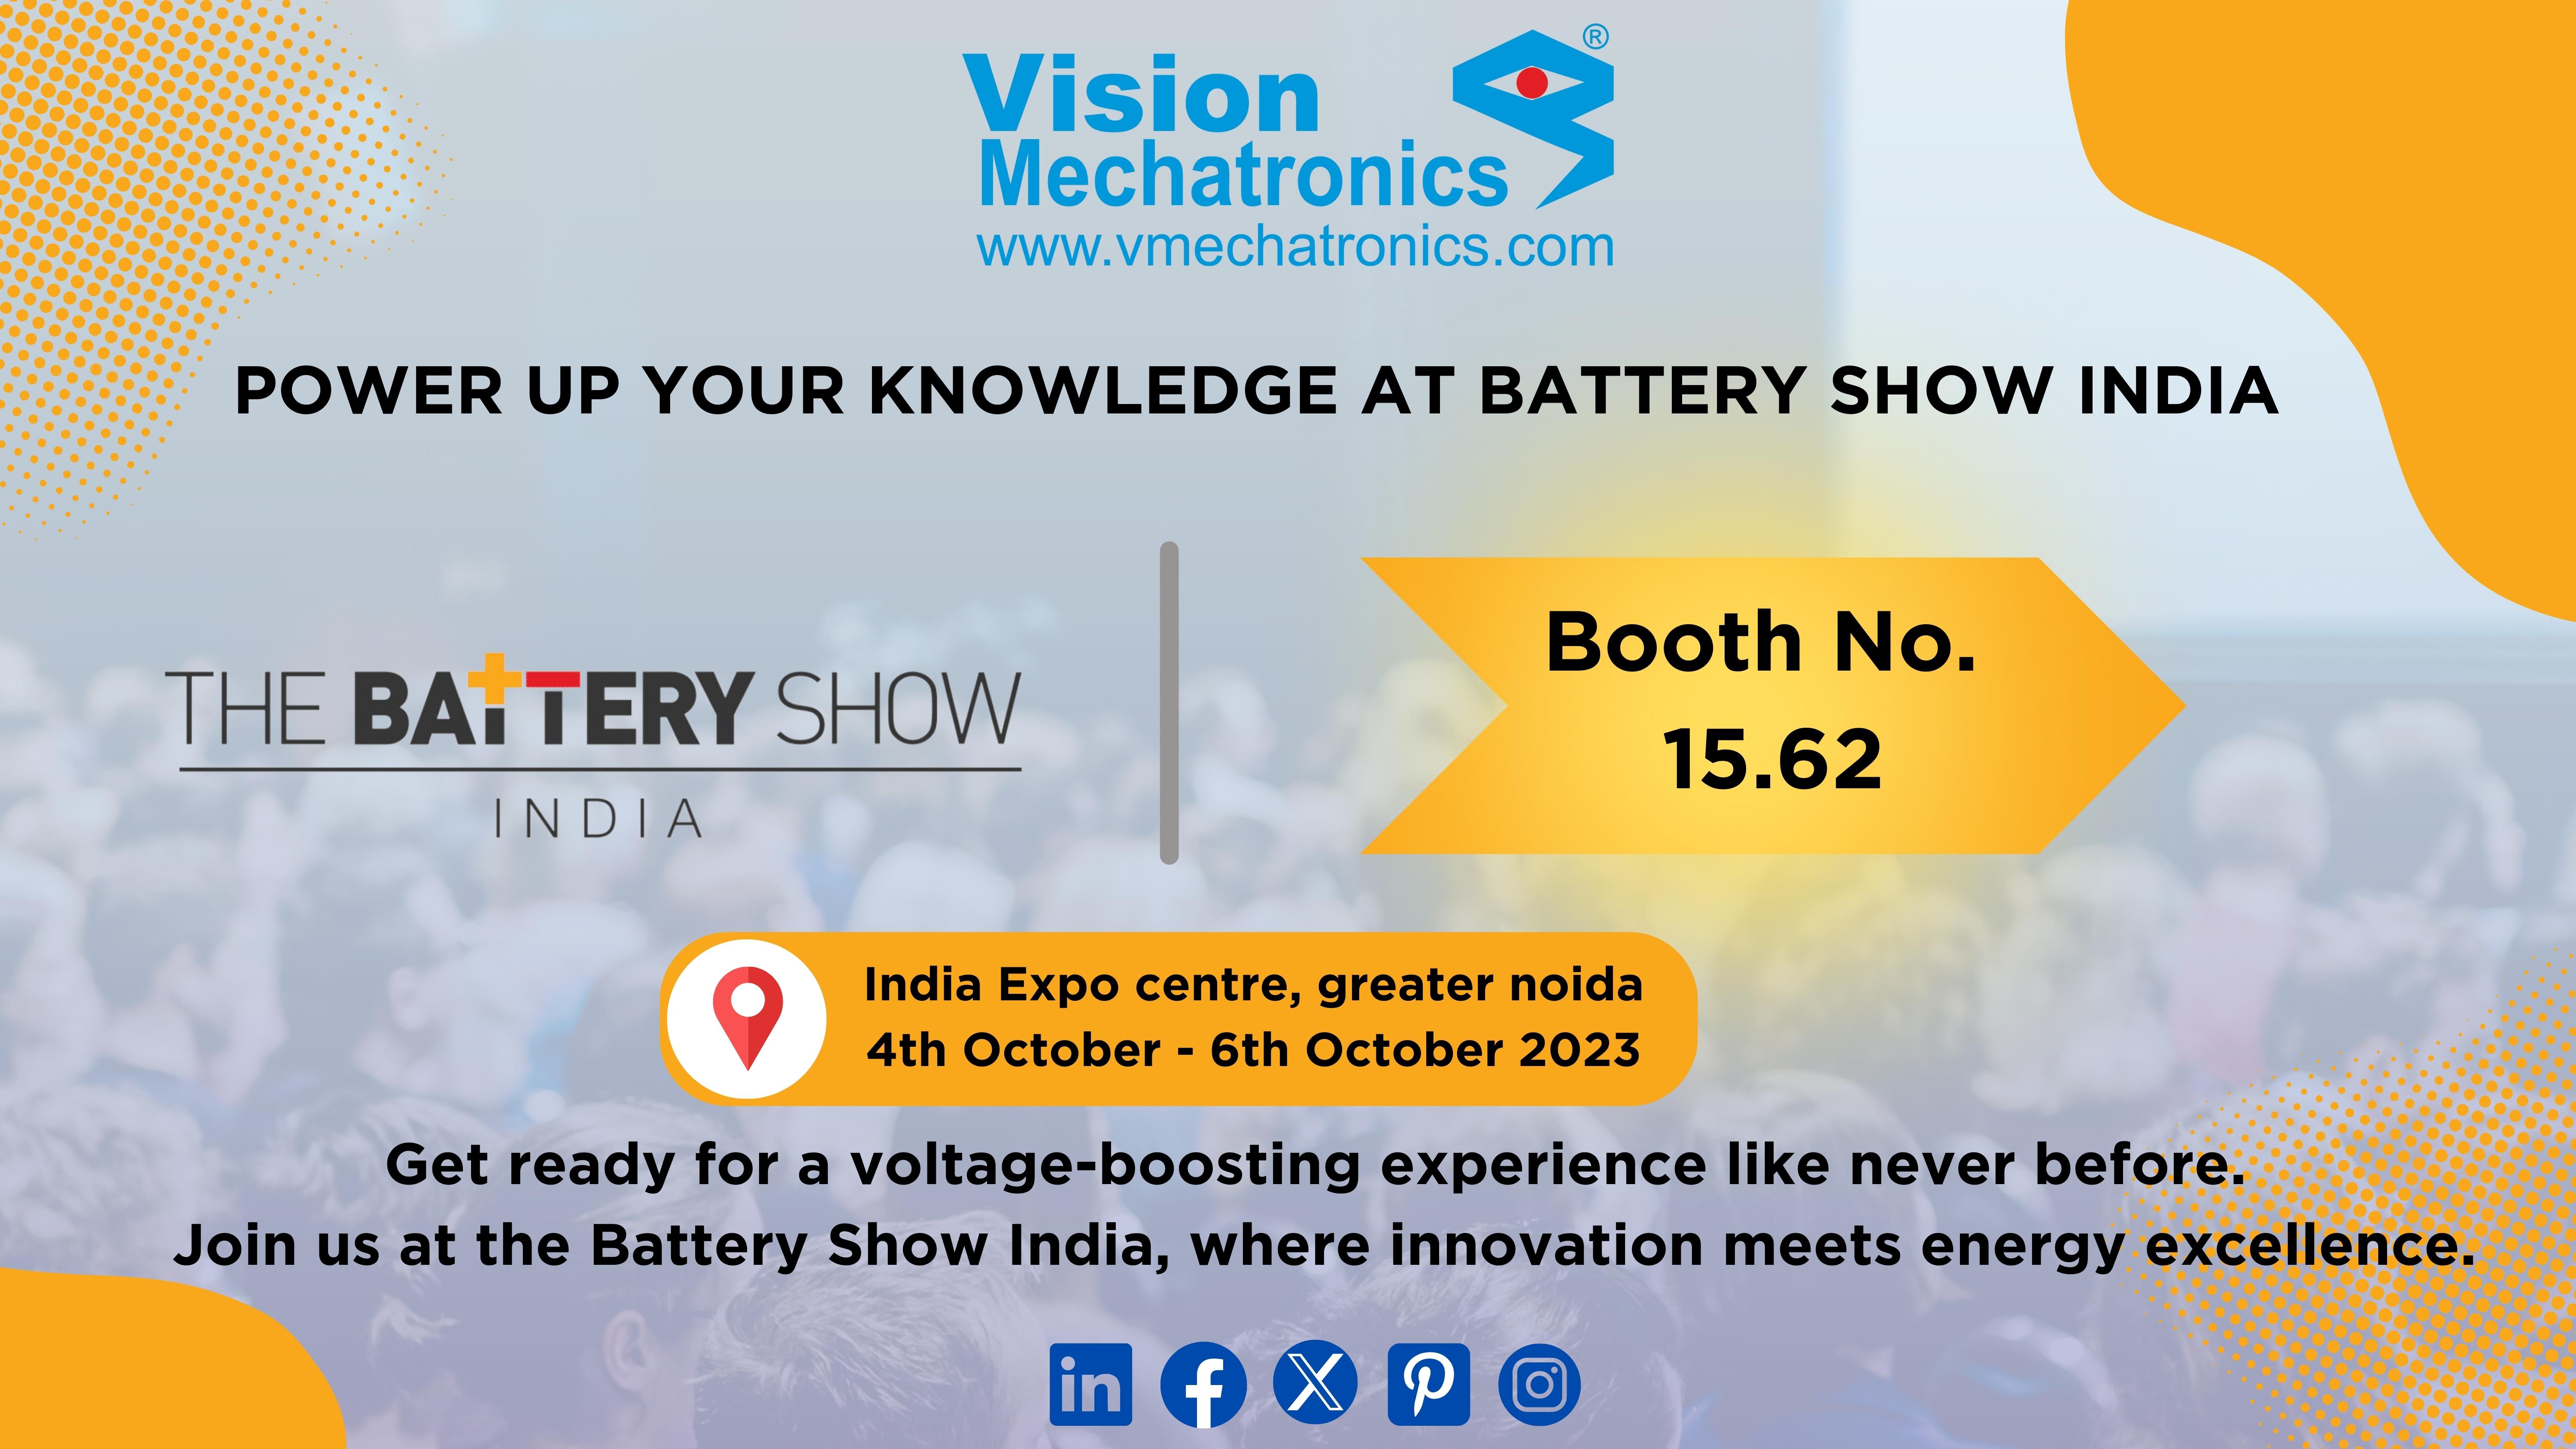 Vision Mechatronics at The Battery Show India 2023, Thane, Maharashtra, India